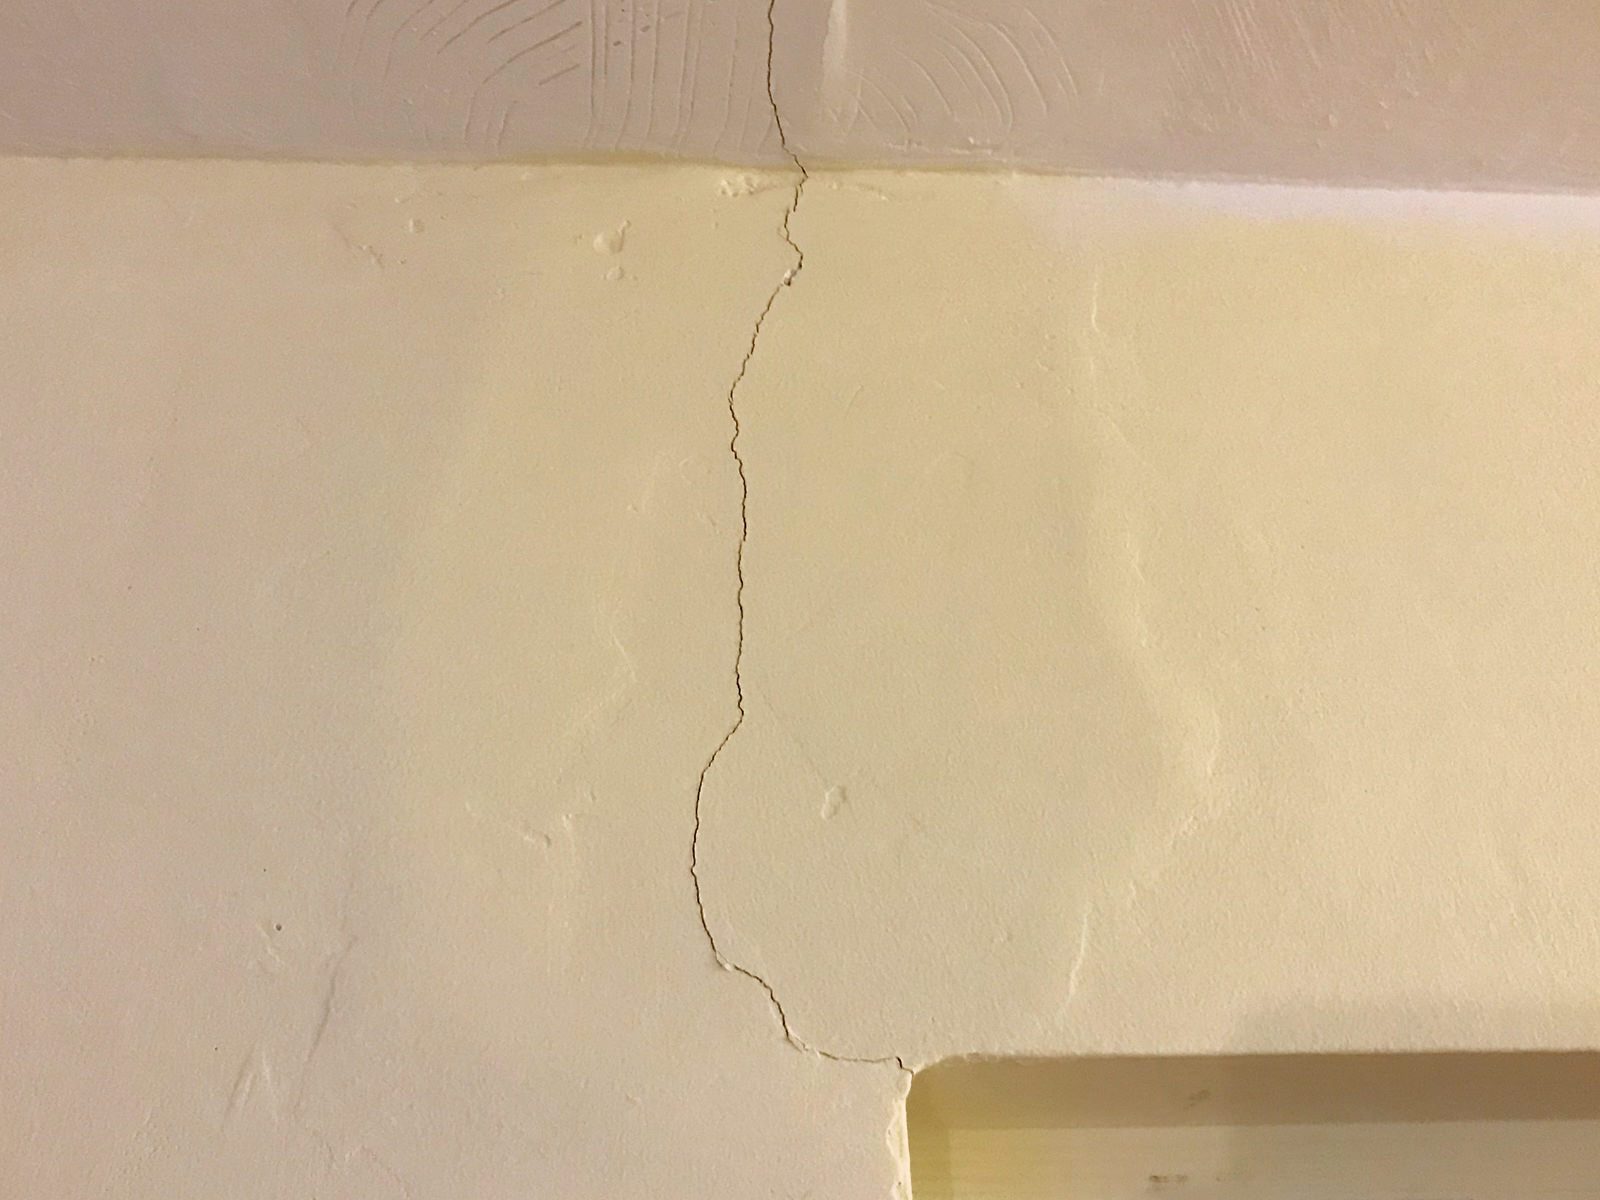 fixing cracks in drywall with caulk